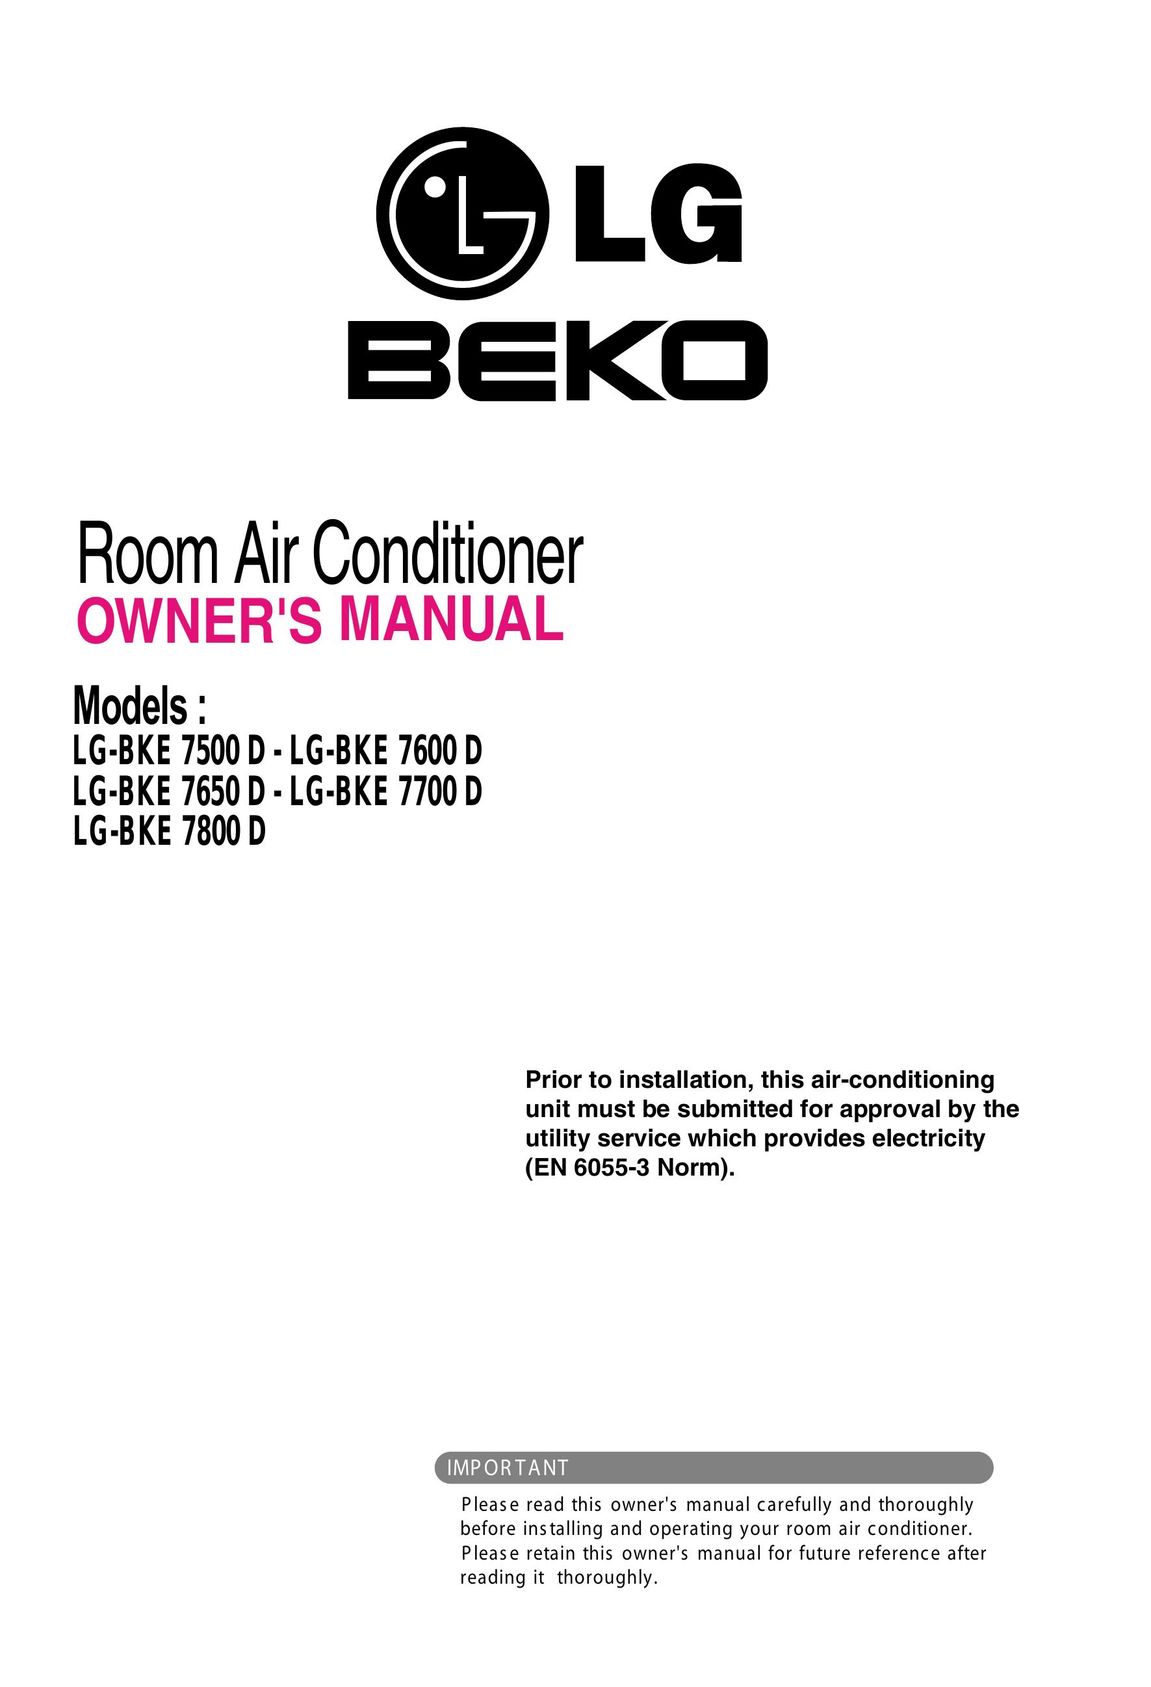 Beko LG-BKE7650D, LG-BKE7700D Air Conditioner User Manual